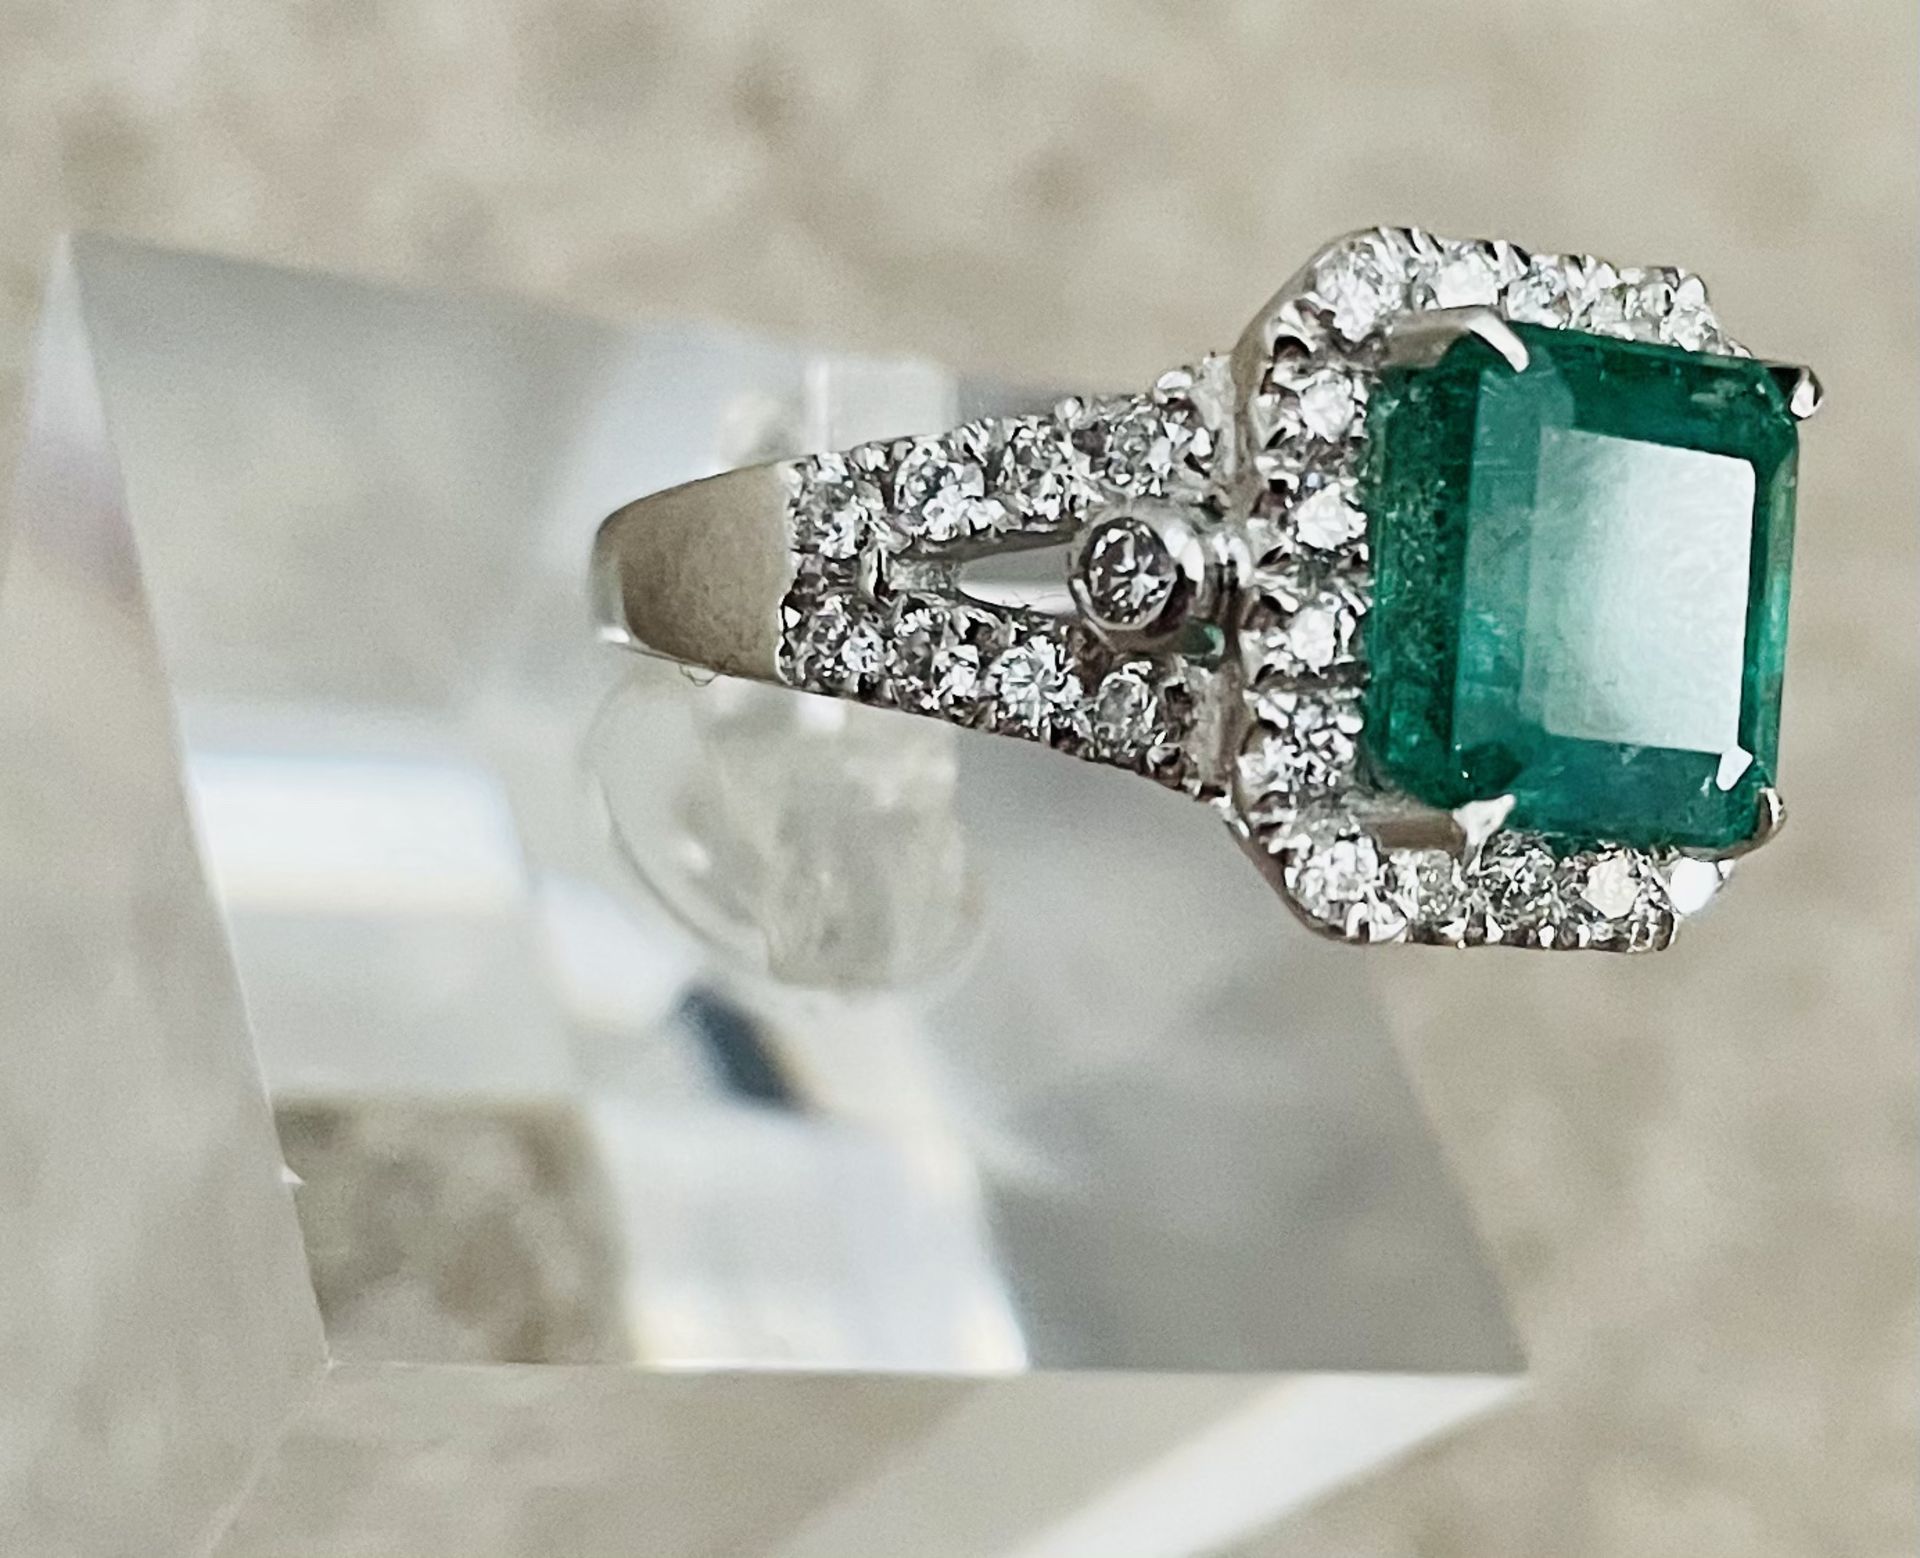 3.49 Carats Zambian Emerald With Natural Diamonds & 18k White Gold - Image 5 of 6